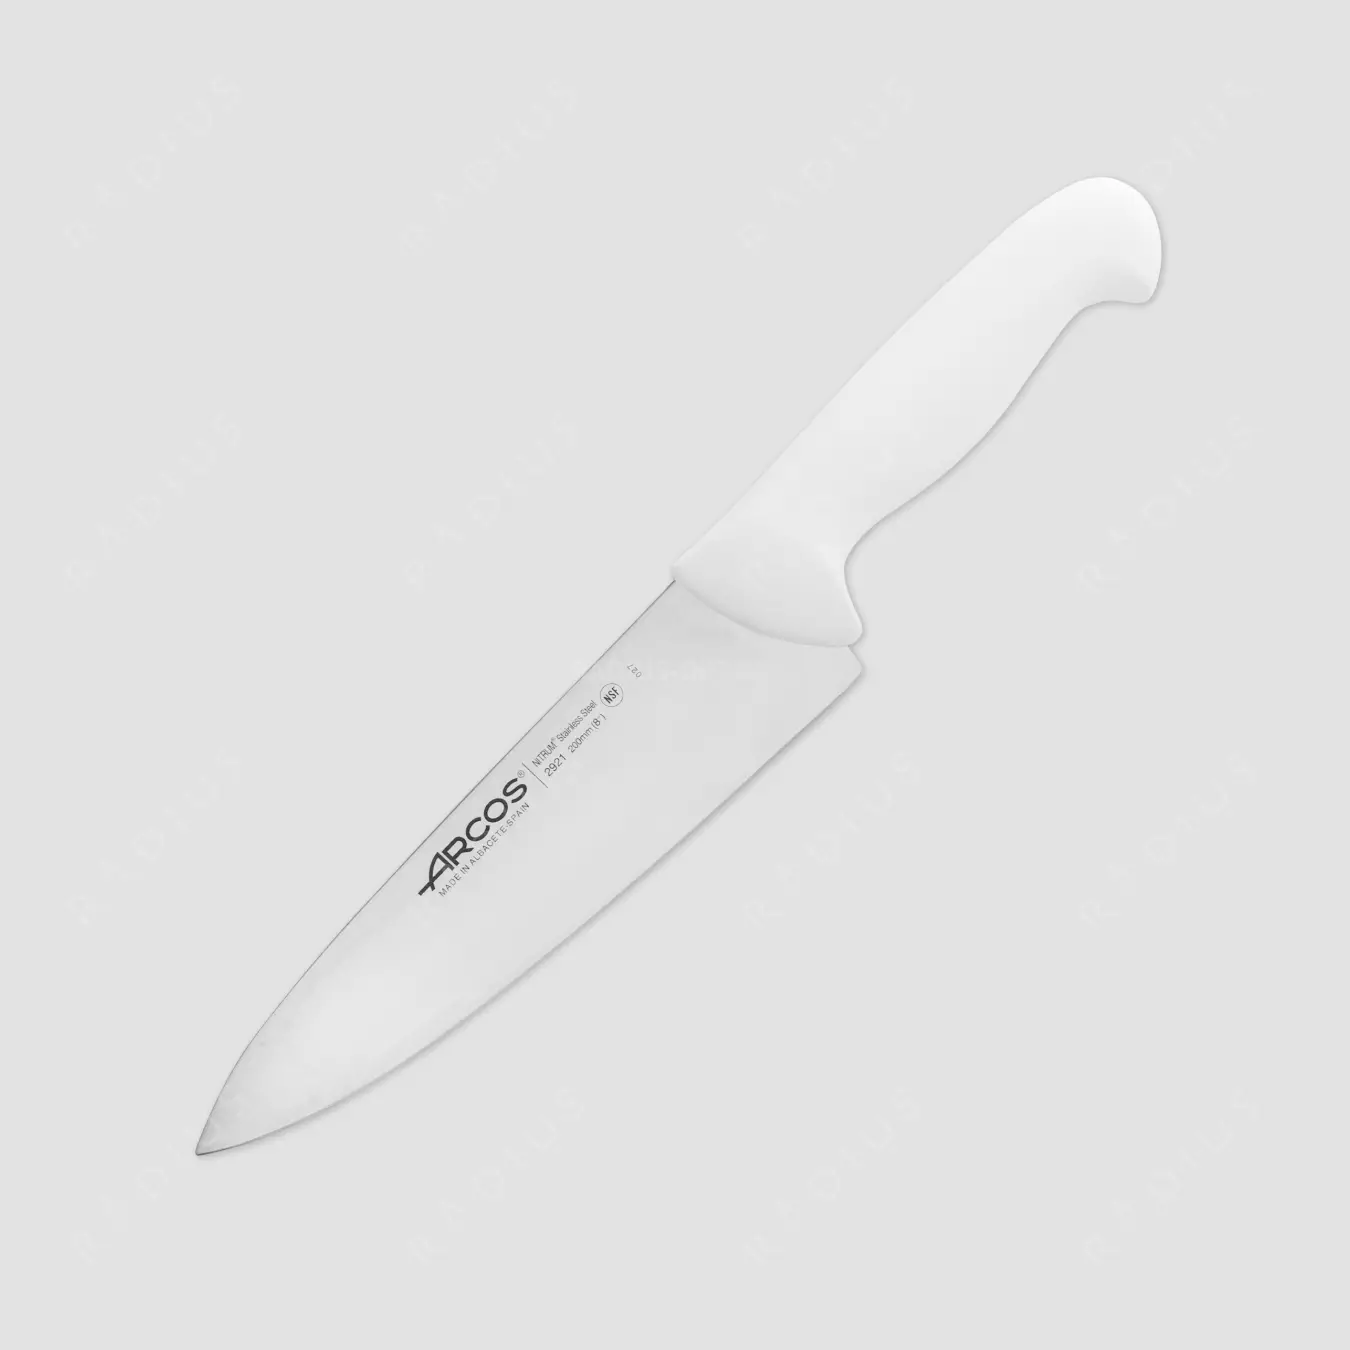 Arcos Noži: nit kuhinjskih nožev iz Španije, španski kovani kuharji iz podjetja Arcos, COOK nož za sir, pregledi 25940_17